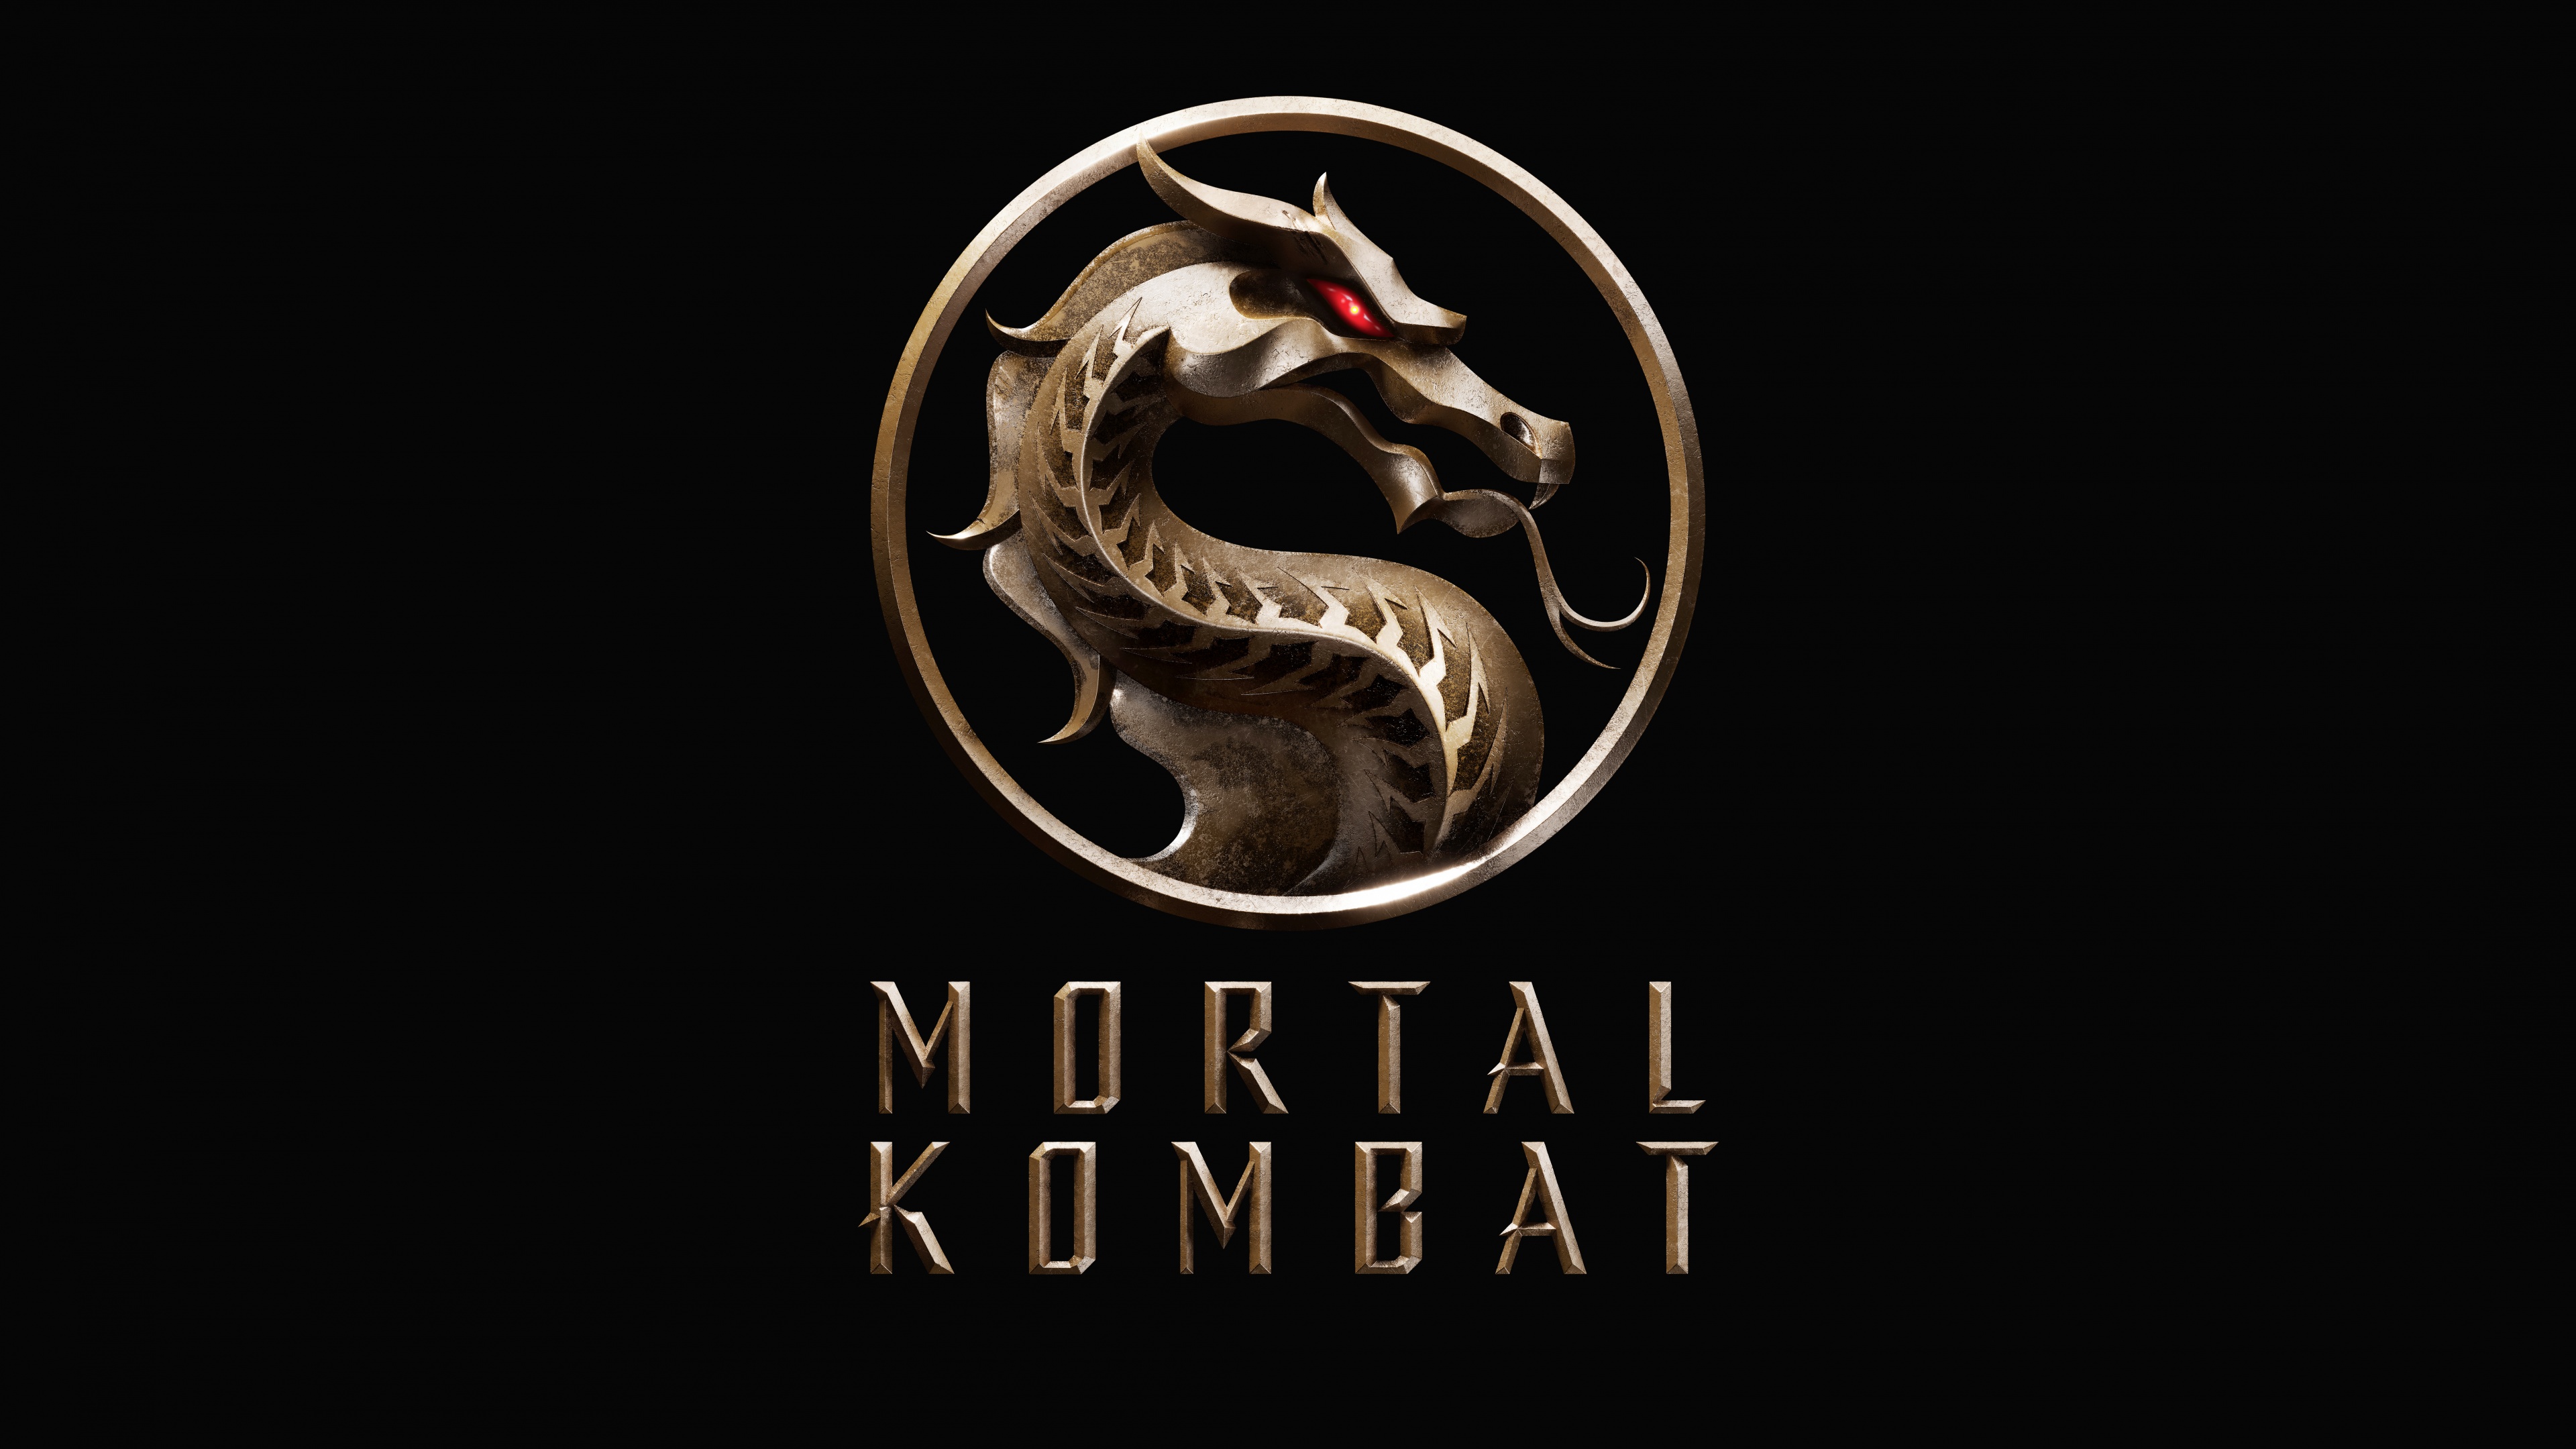 Movie Mortal Kombat (2021) 4k Ultra HD Wallpaper